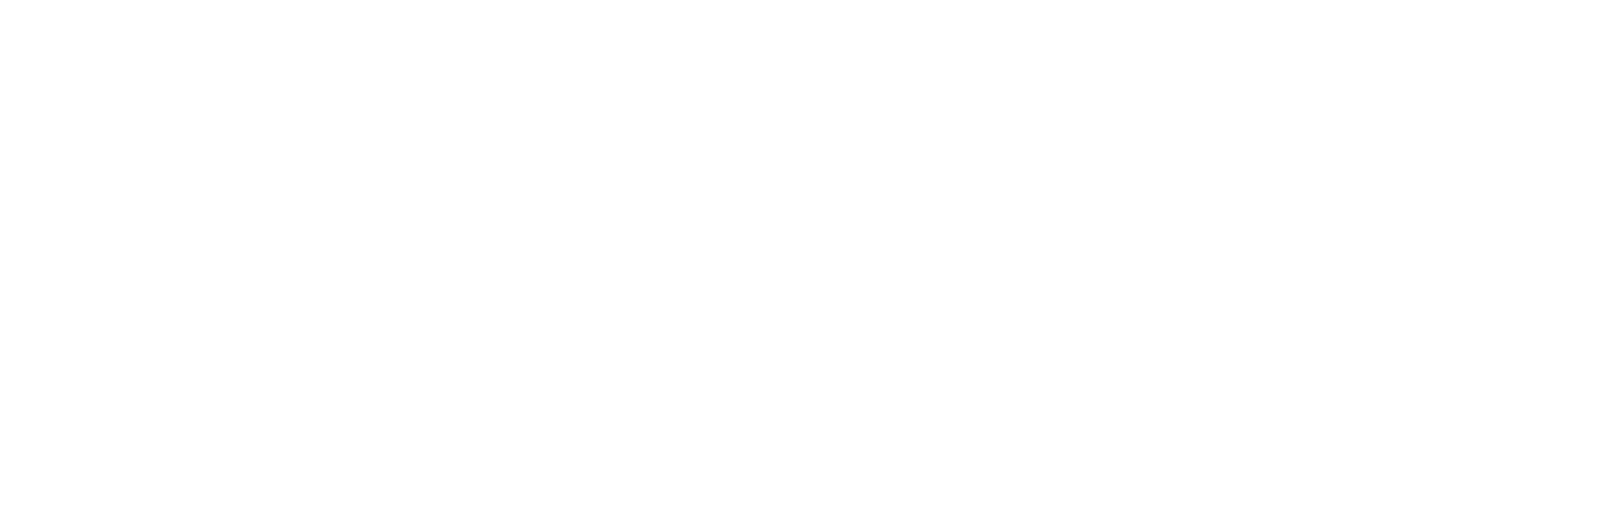 bb-logo-ondertitel-wit